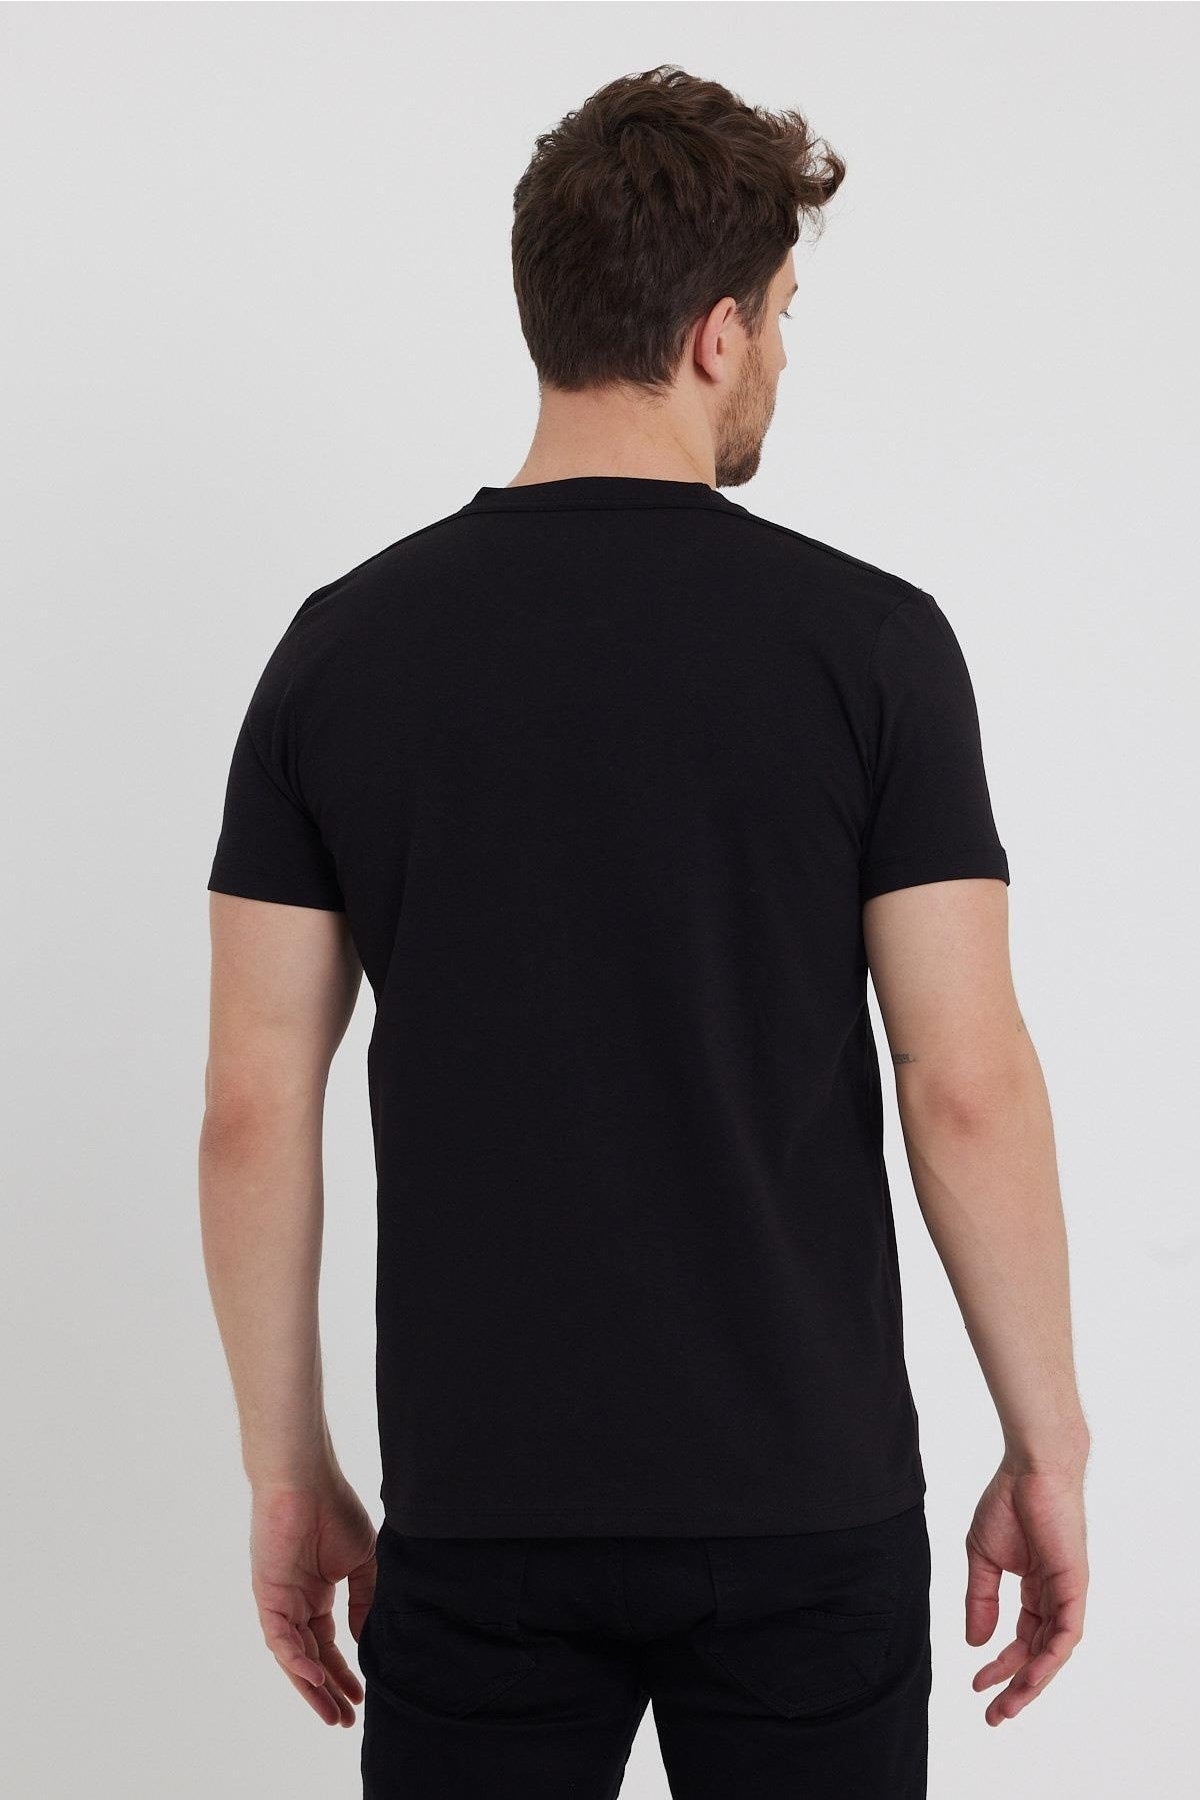 Black Standard Pattern Basic 5-Pack T-shirt